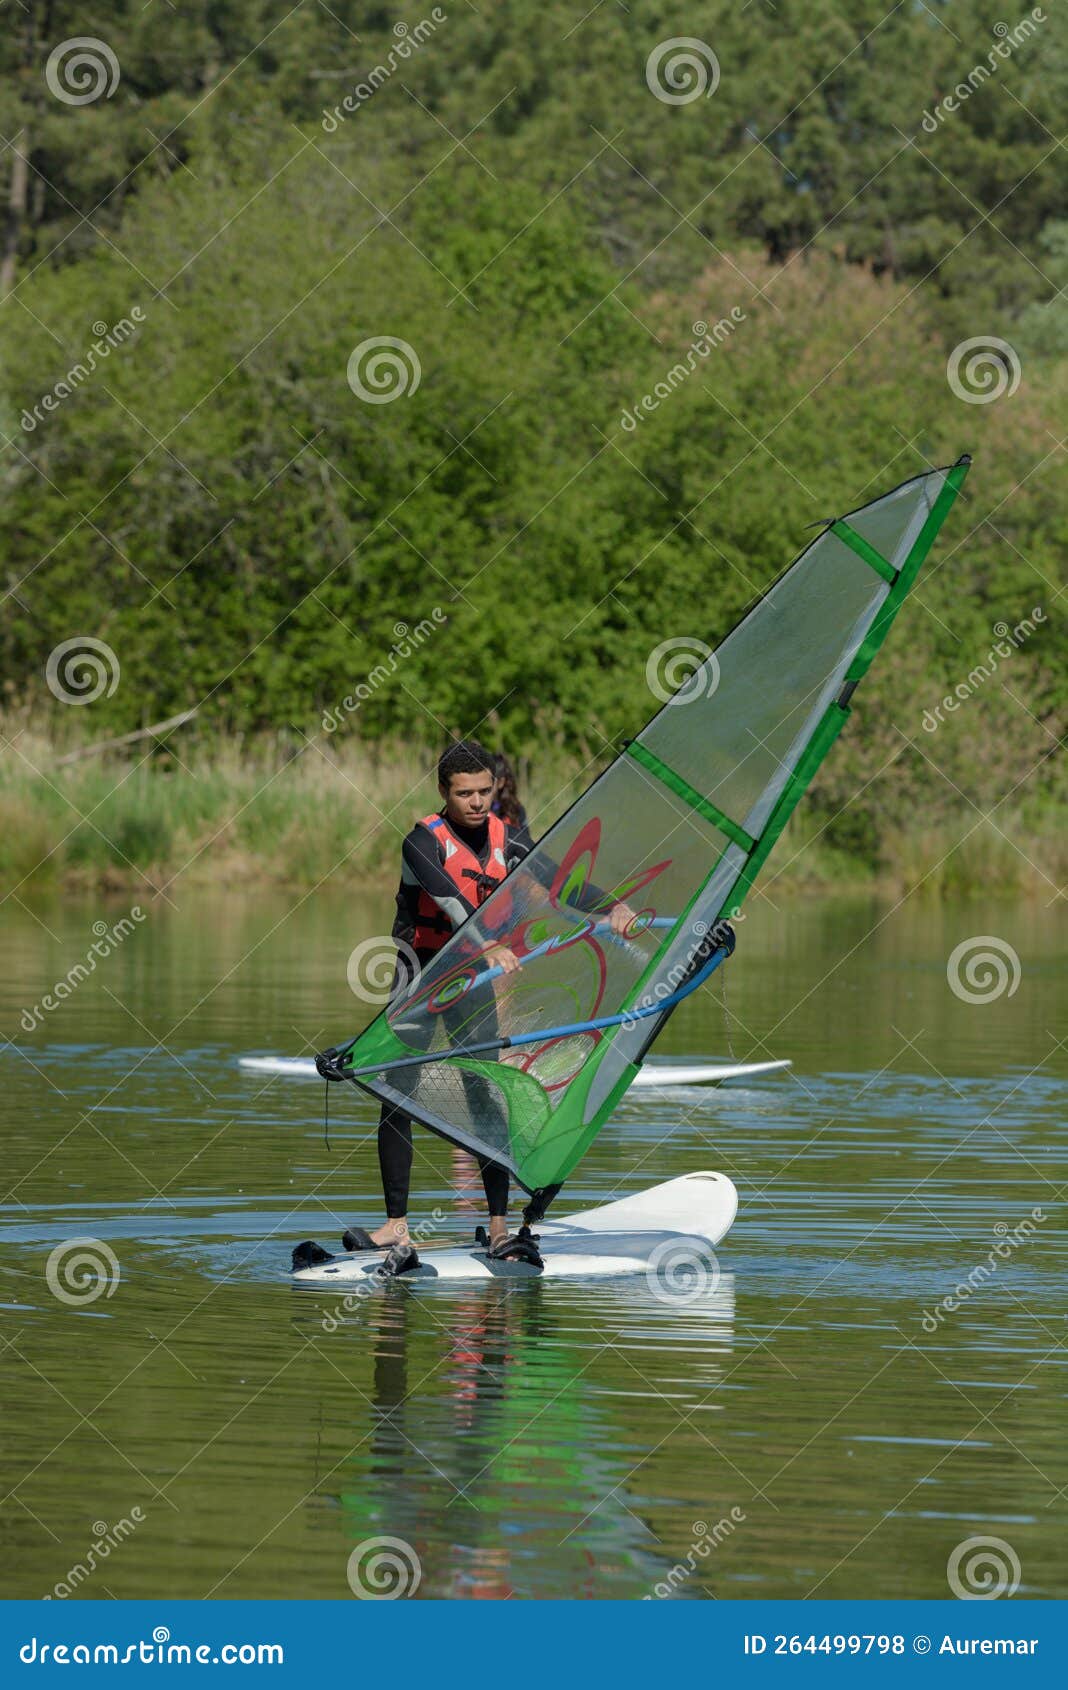 young man windsurfing on lake